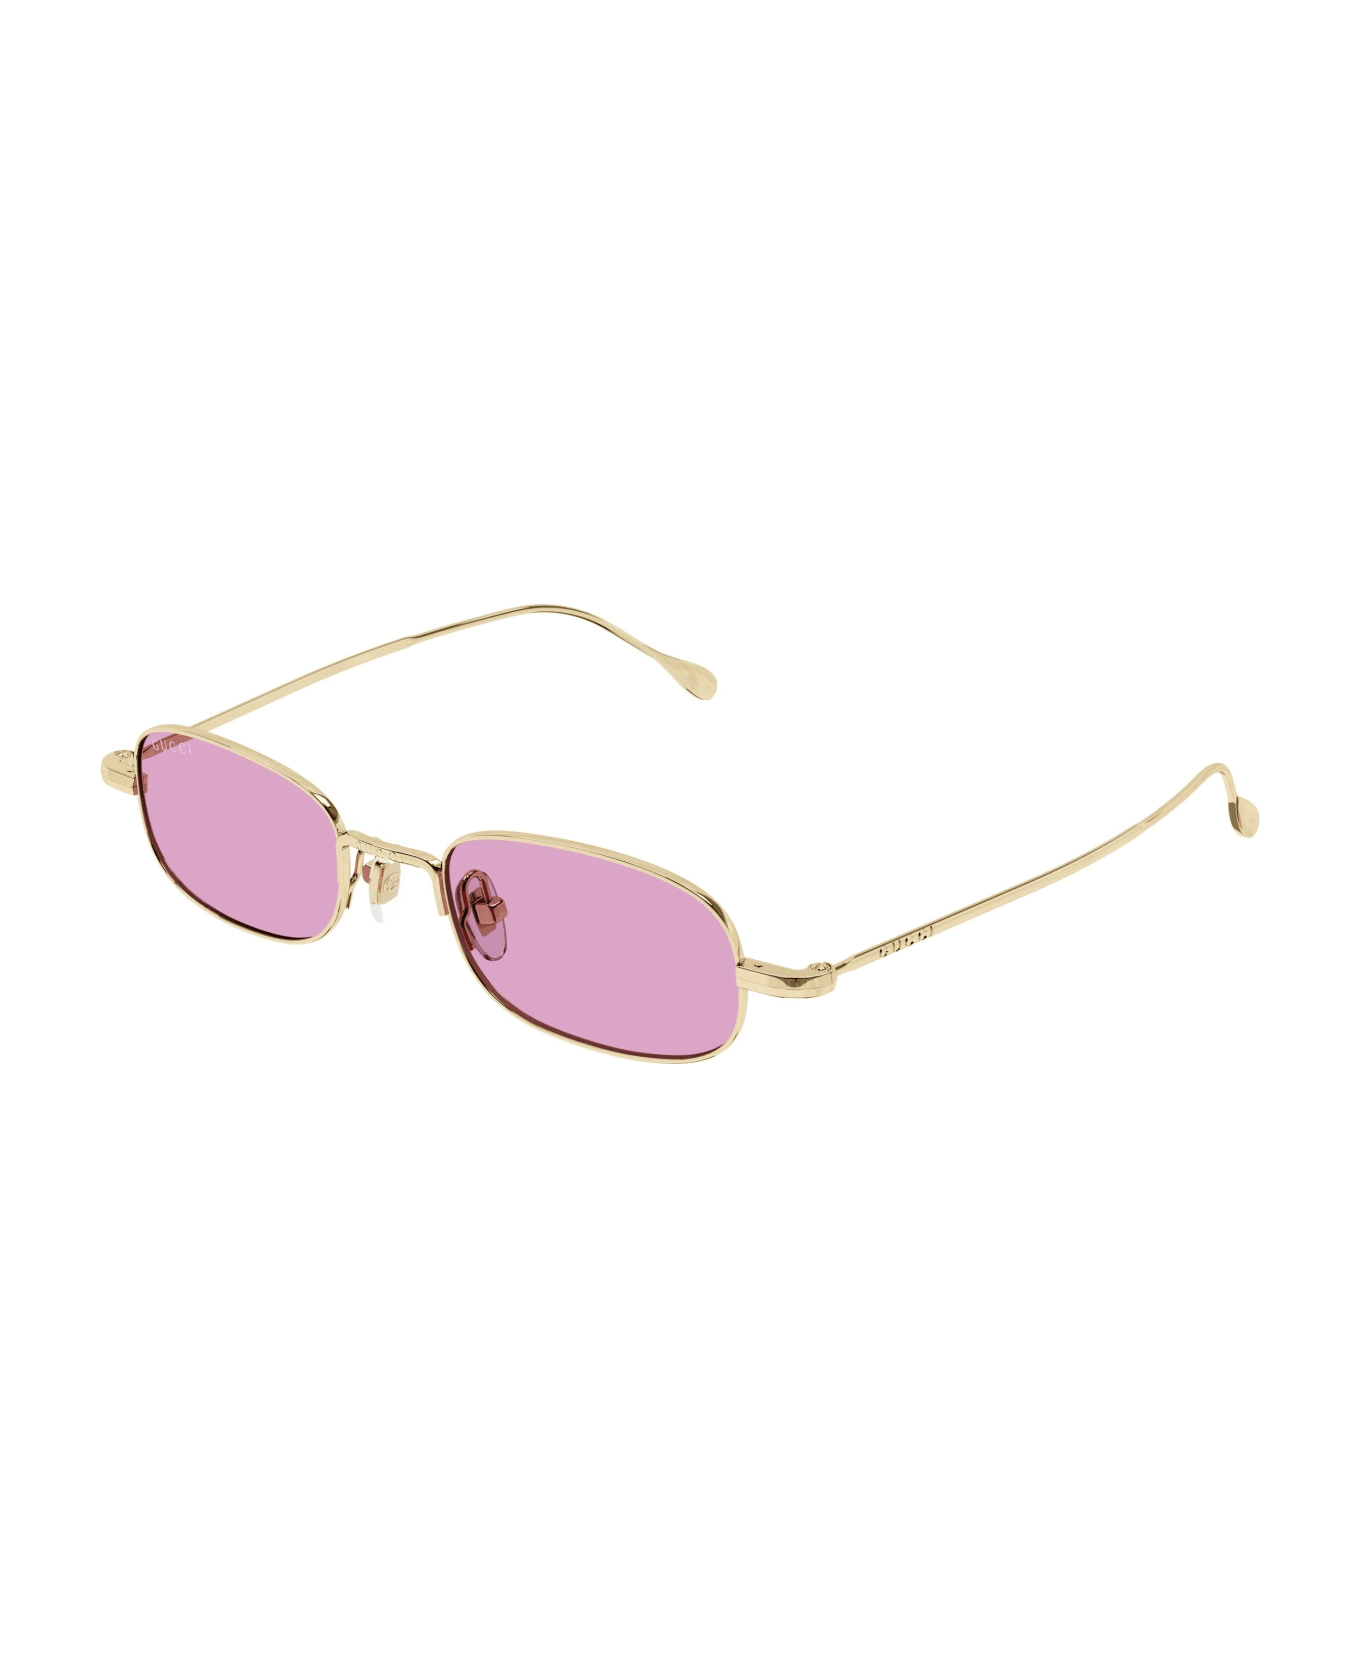 Gucci Eyewear Sunglasses - Oro/Rosa